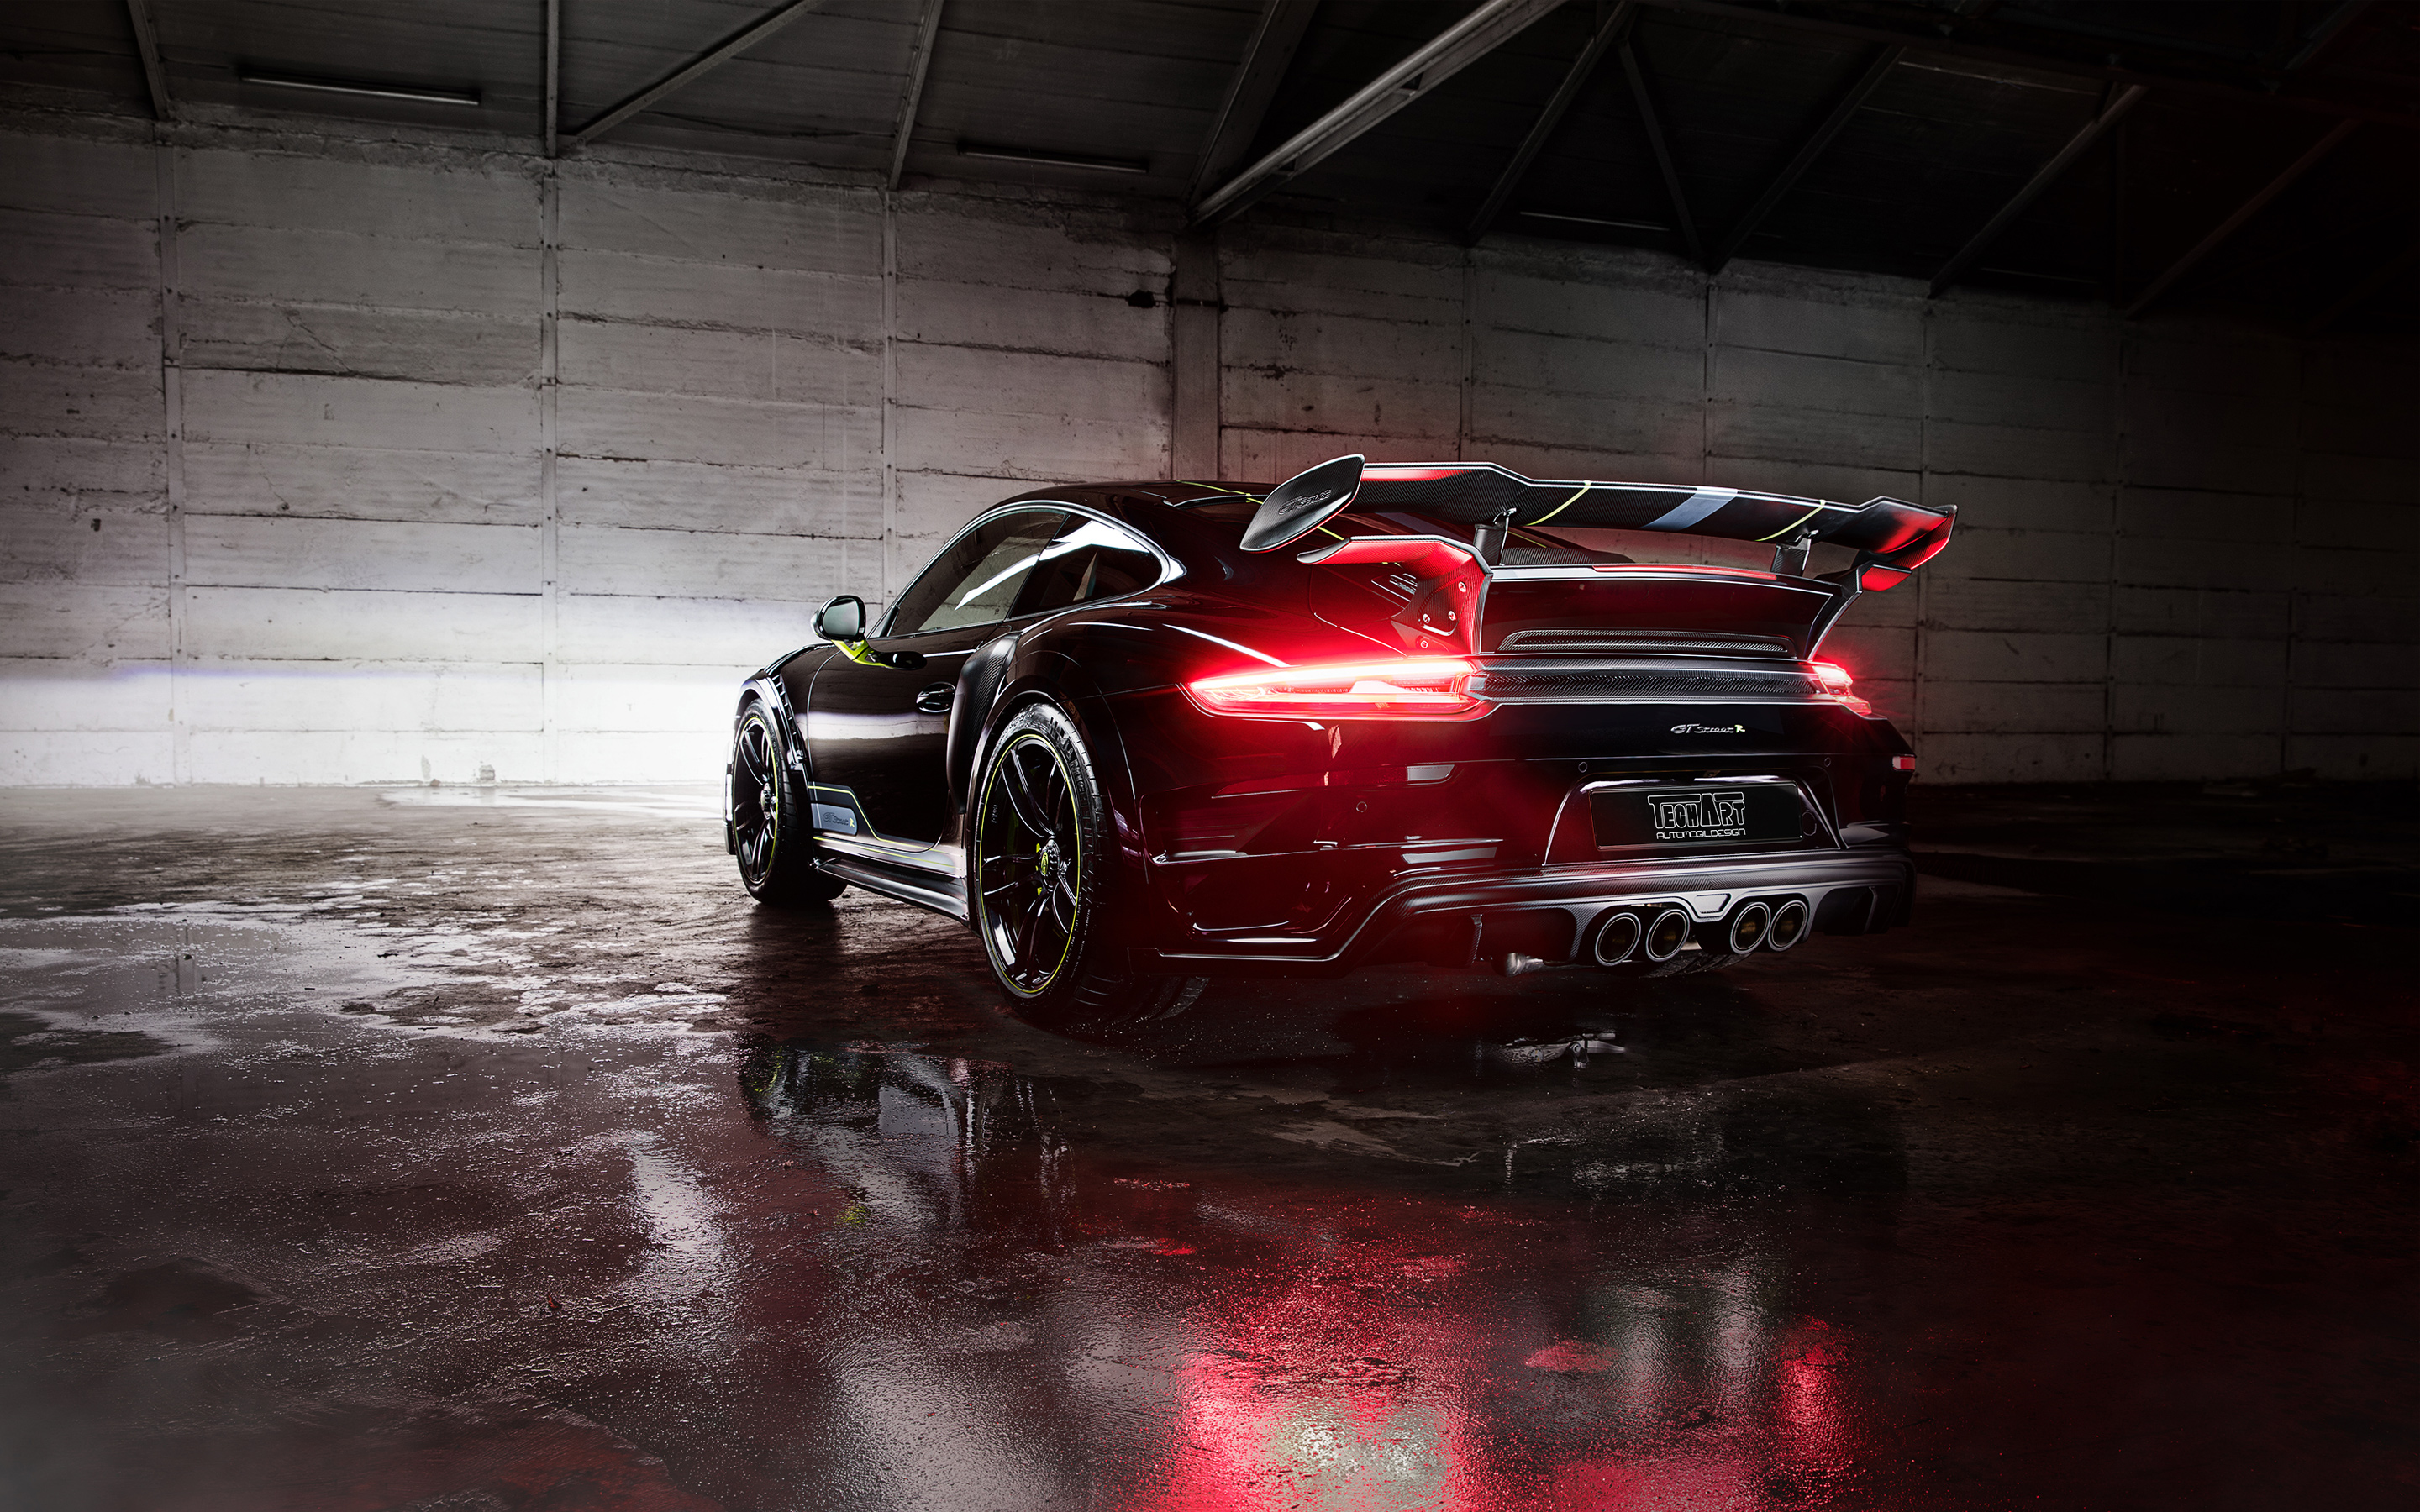 Porsche 911 Turbo Black Garage - HD Wallpapers - Free Wallpapers ...